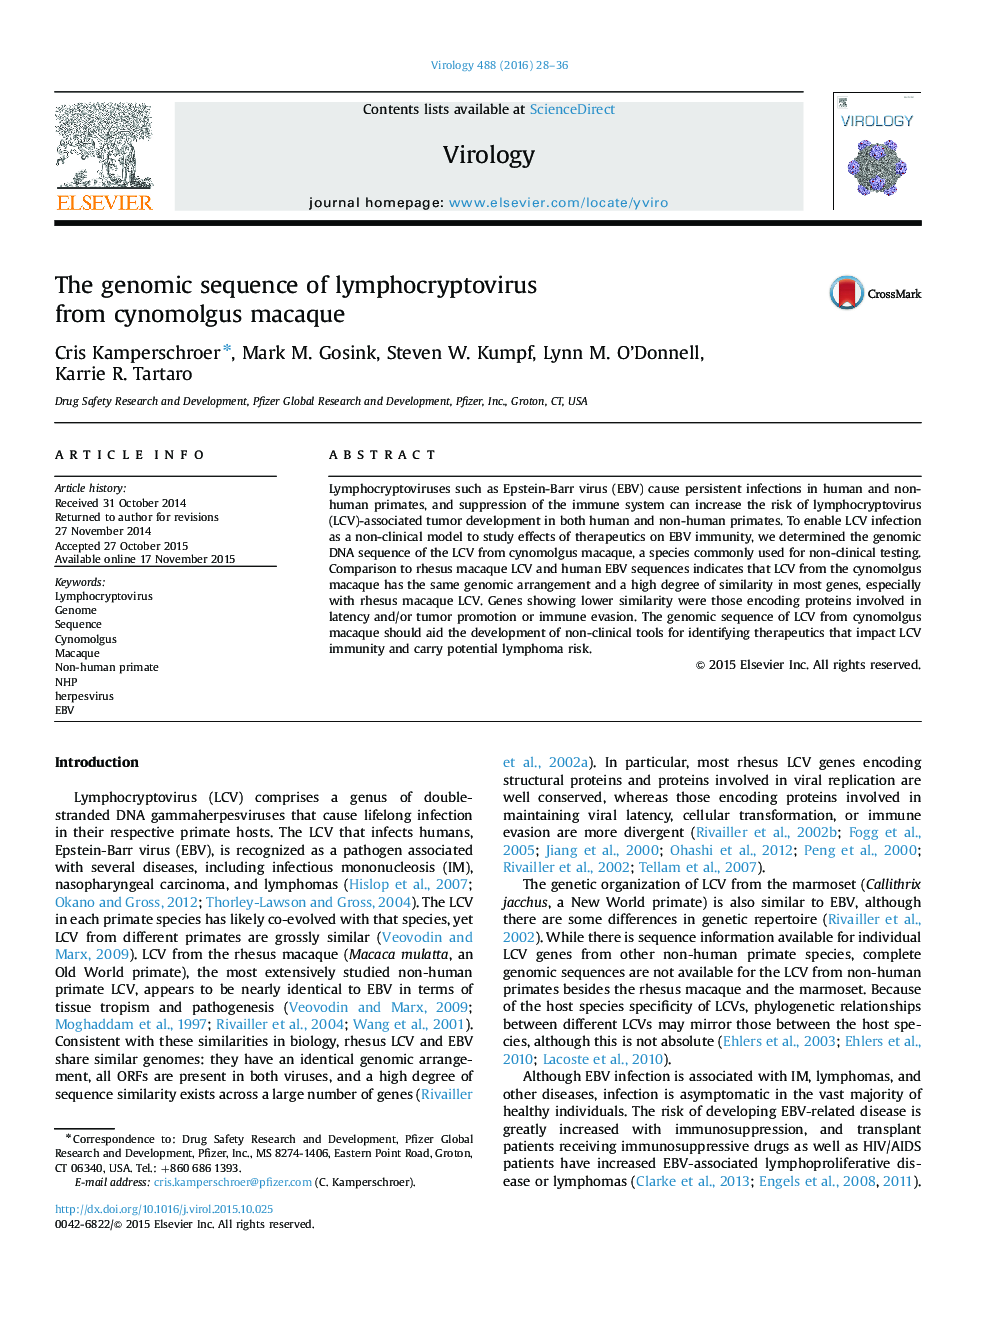 The genomic sequence of lymphocryptovirus from cynomolgus macaque